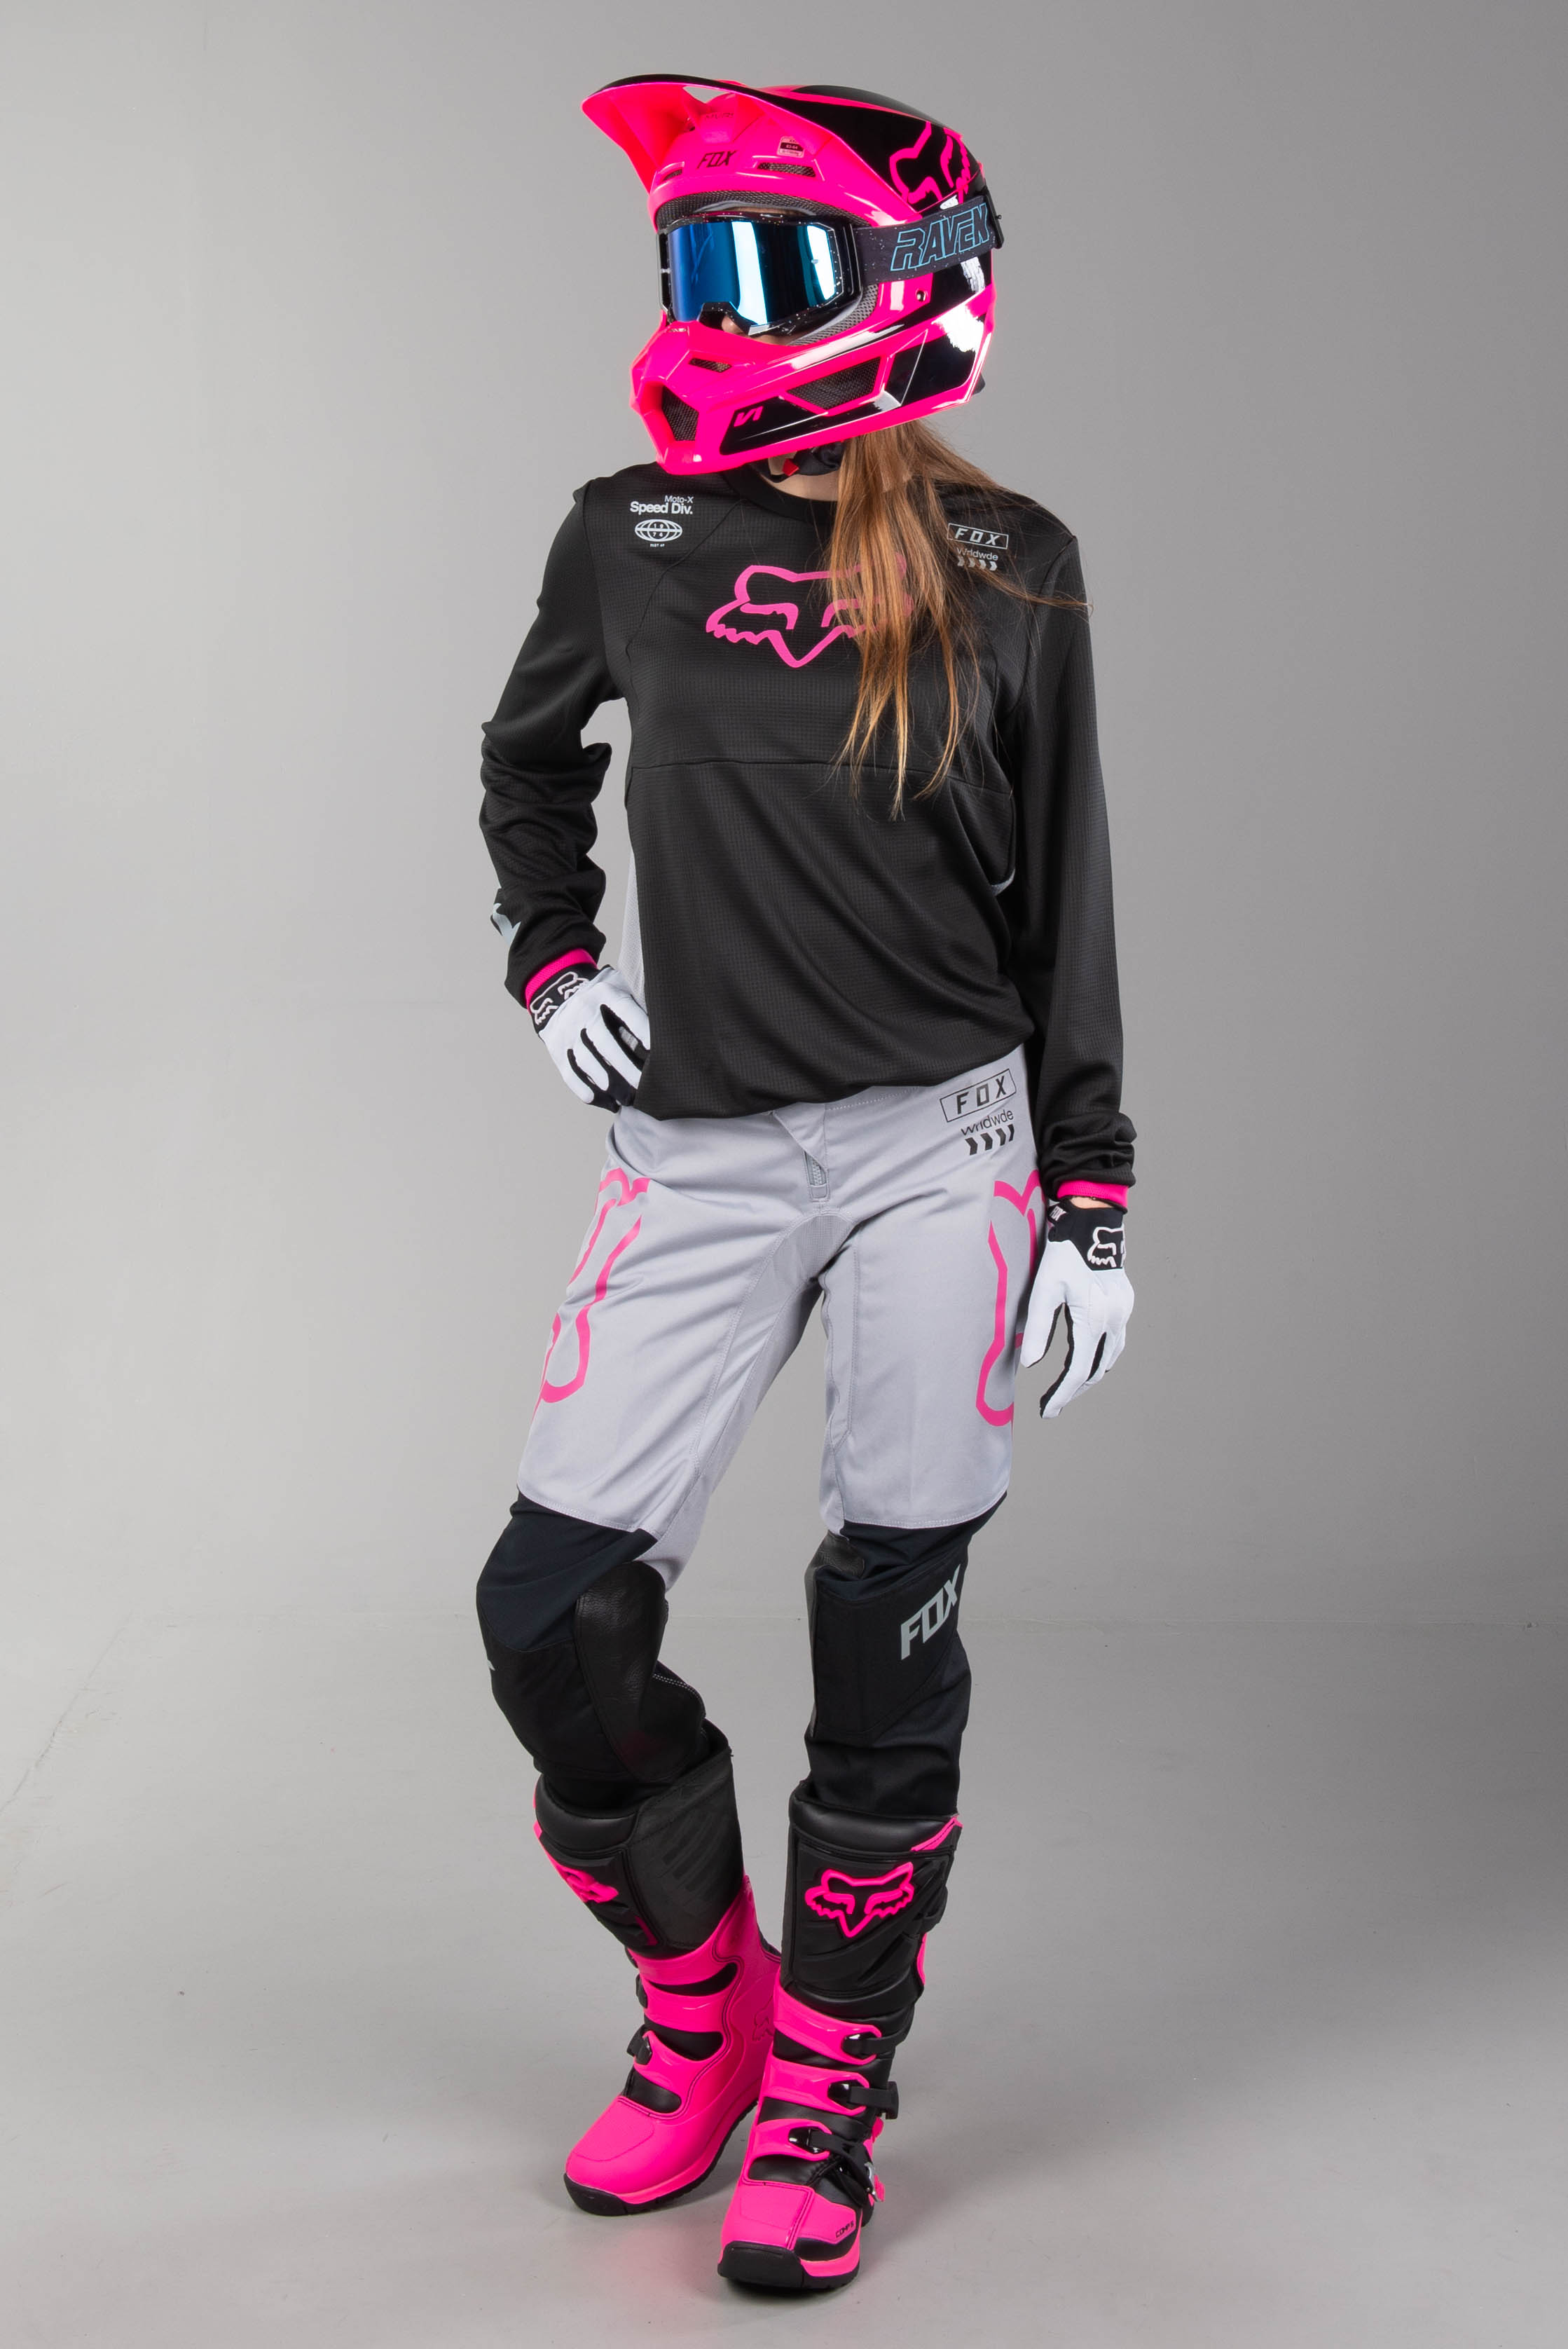 Girl Motocross Gear Hotsell, 58% | www.bridgepartnersllc.com